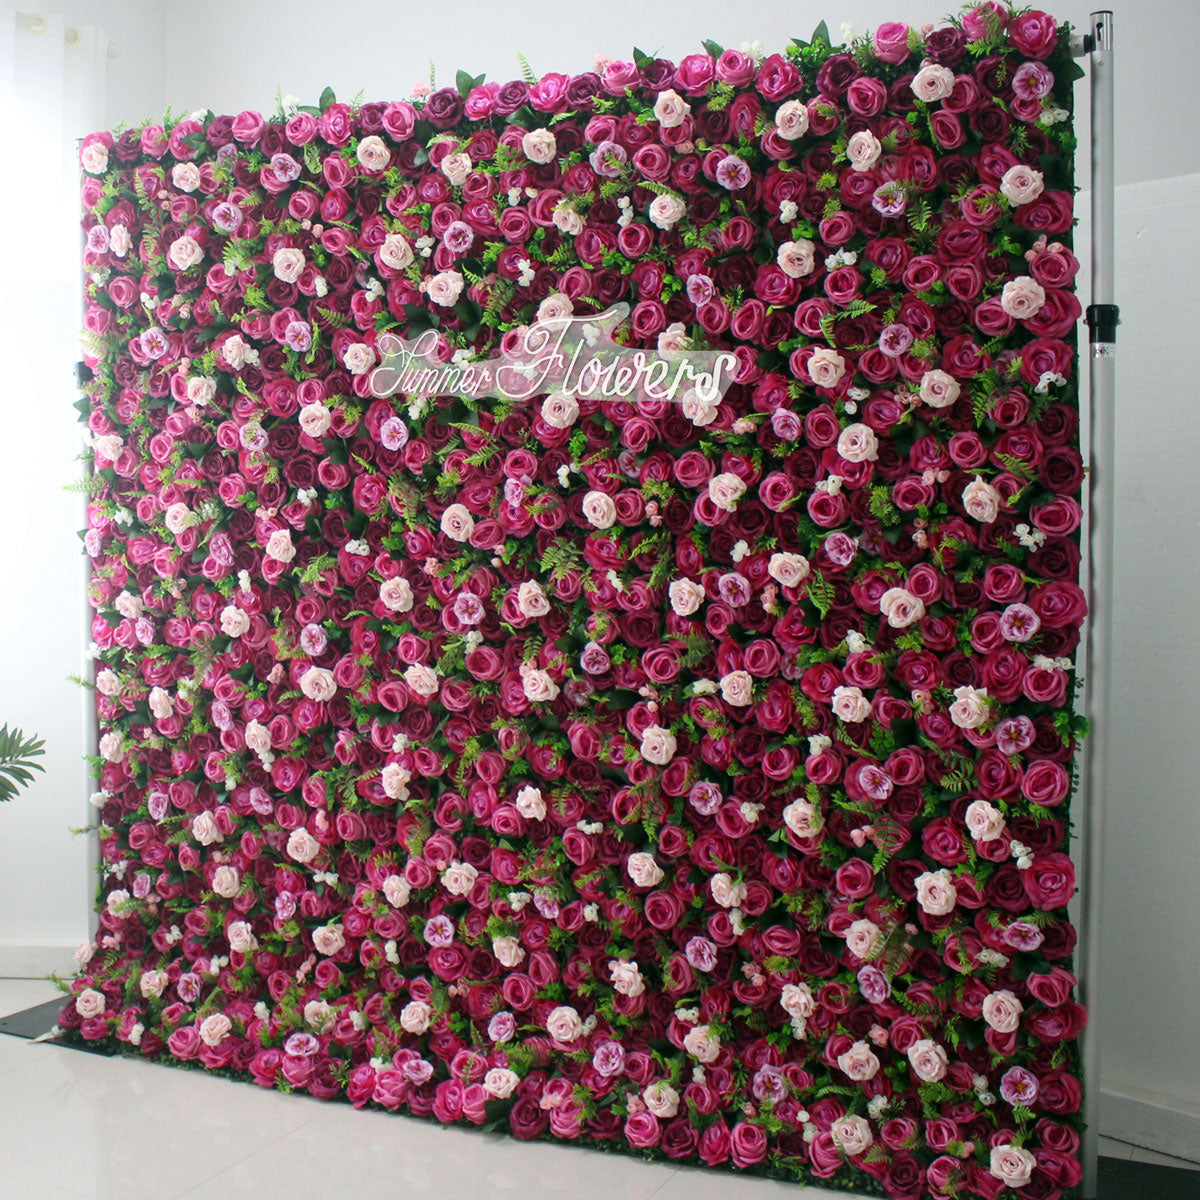 Summer Flower:CB-177 8ft*8ft Cloth Back Artificial Flower Wall Backdrop